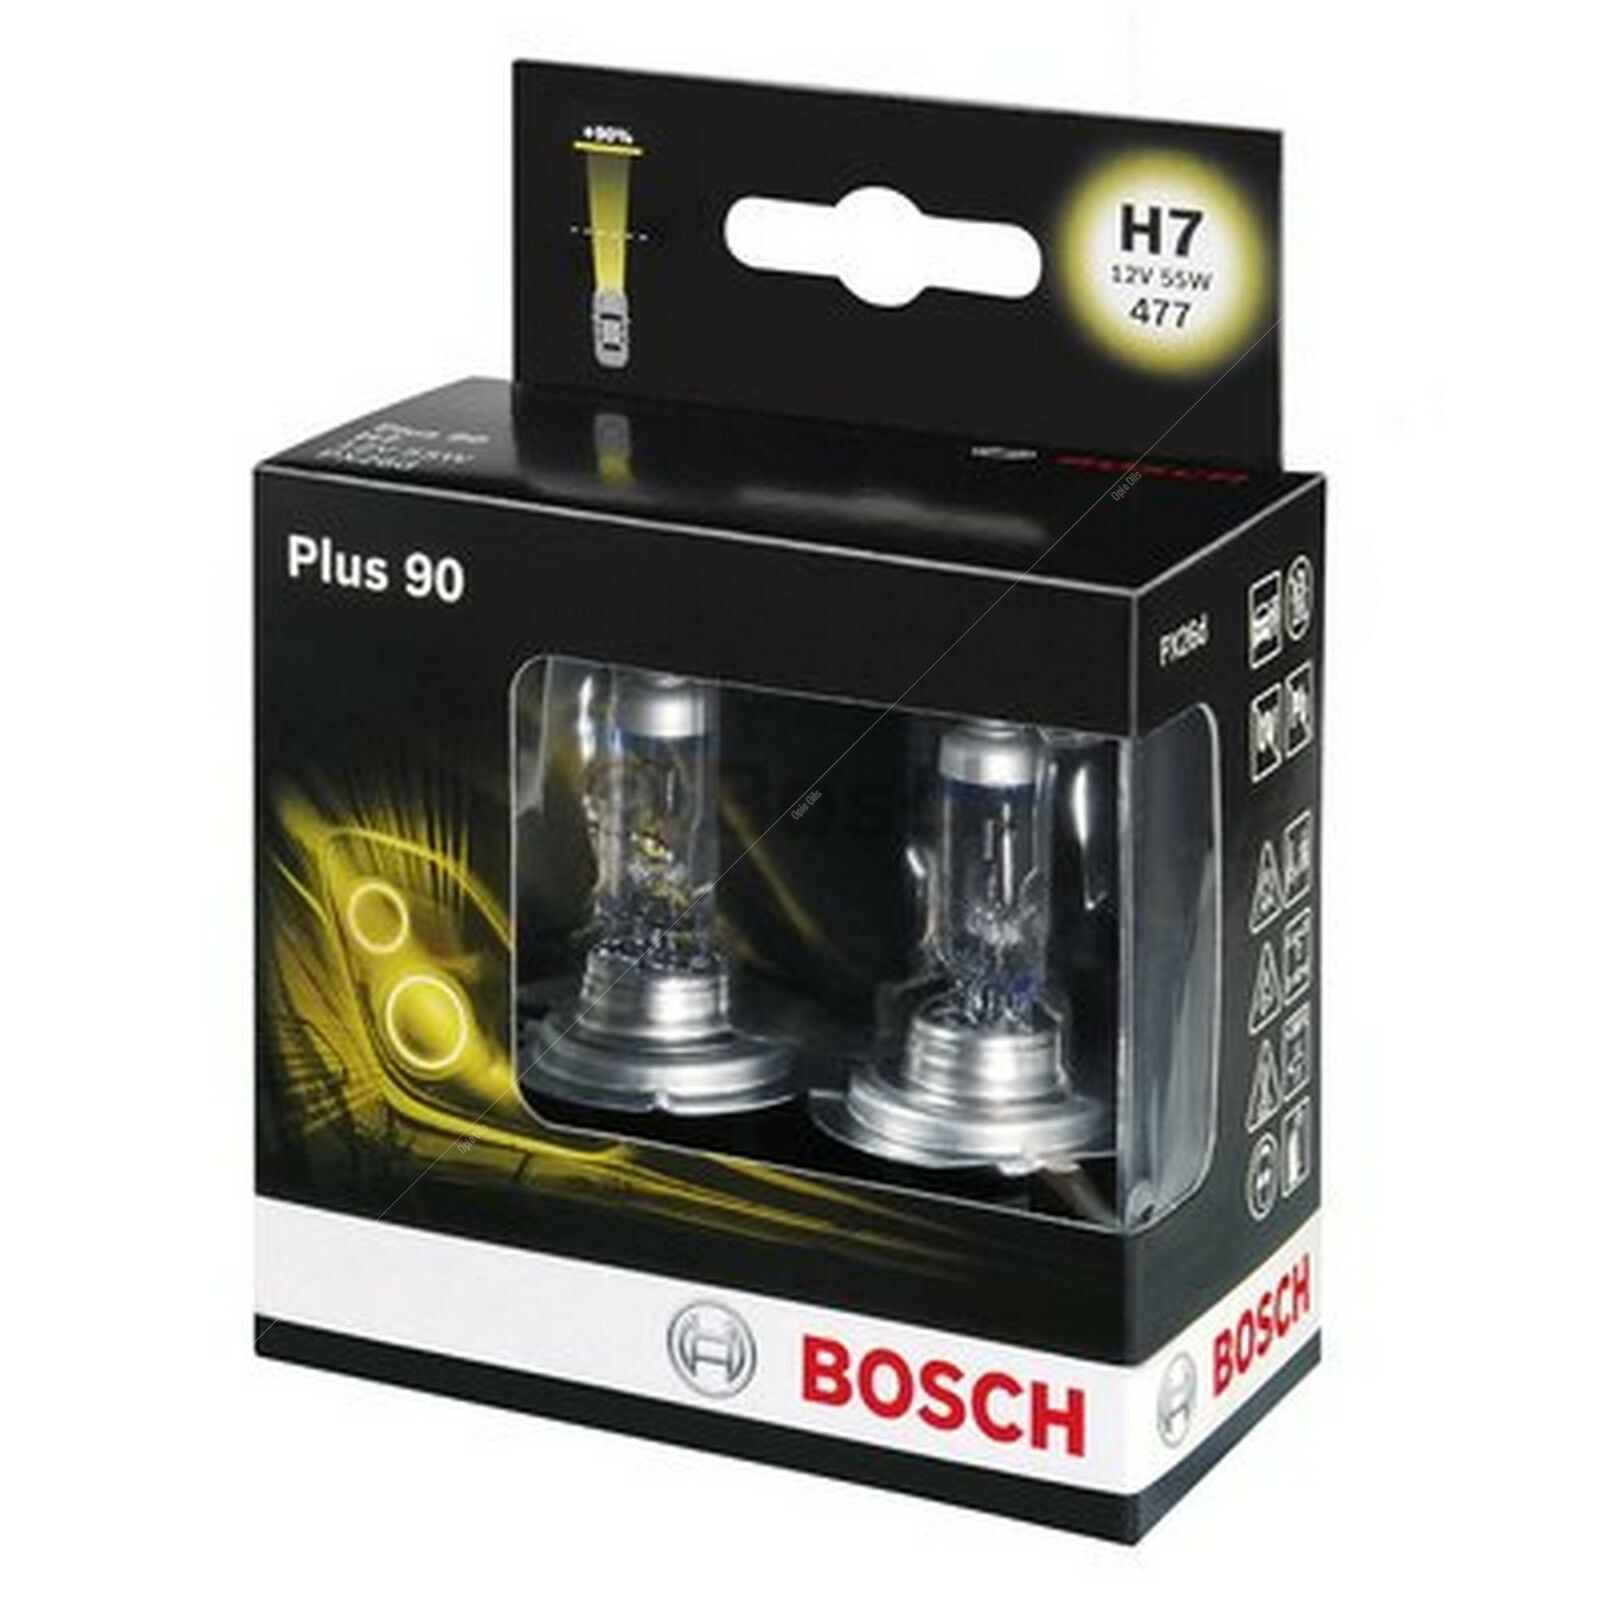 Bosch Plus 90